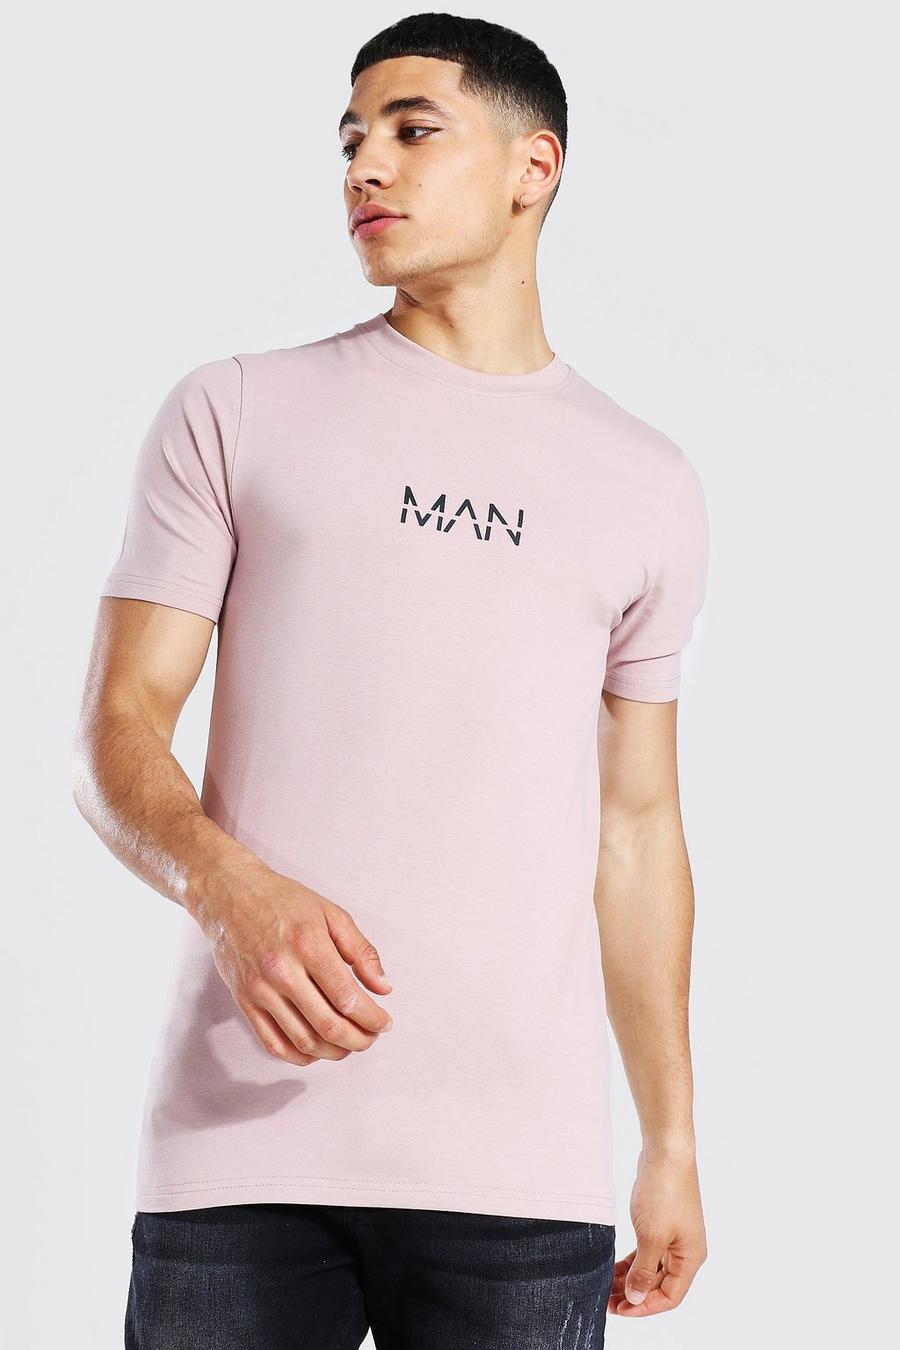 Camiseta MAN Original ajustada al músculo, Bark image number 1